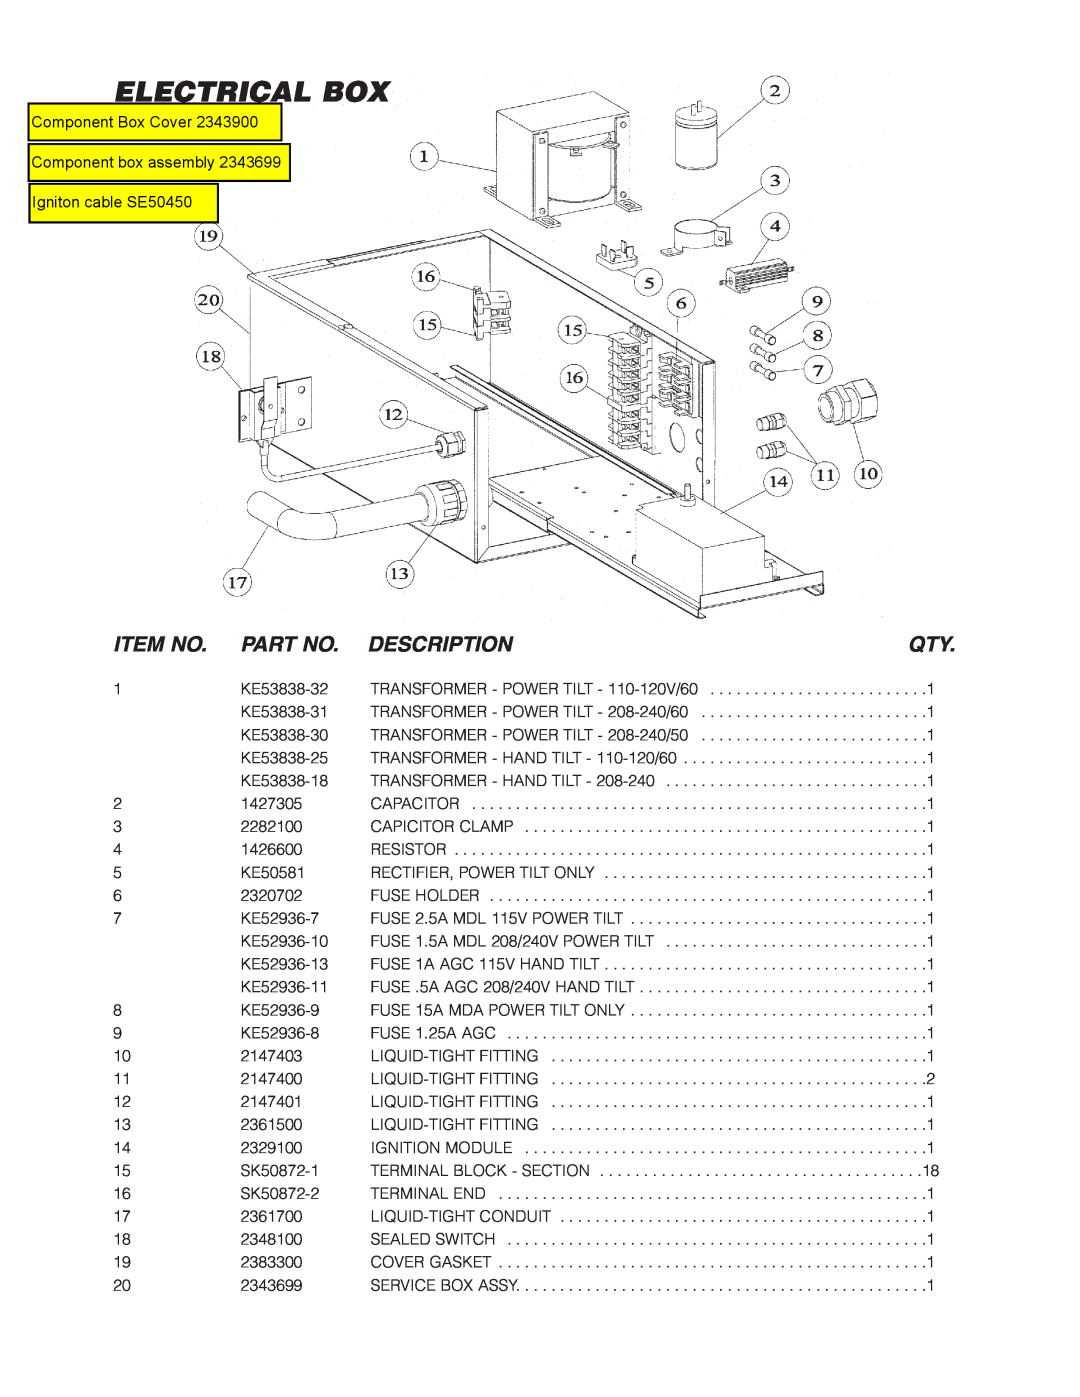 Cleveland Range SGL-40-TR, SGL-30-TR manual Electrical Box, Item No, Description, Component Box Cover Component box assembly 